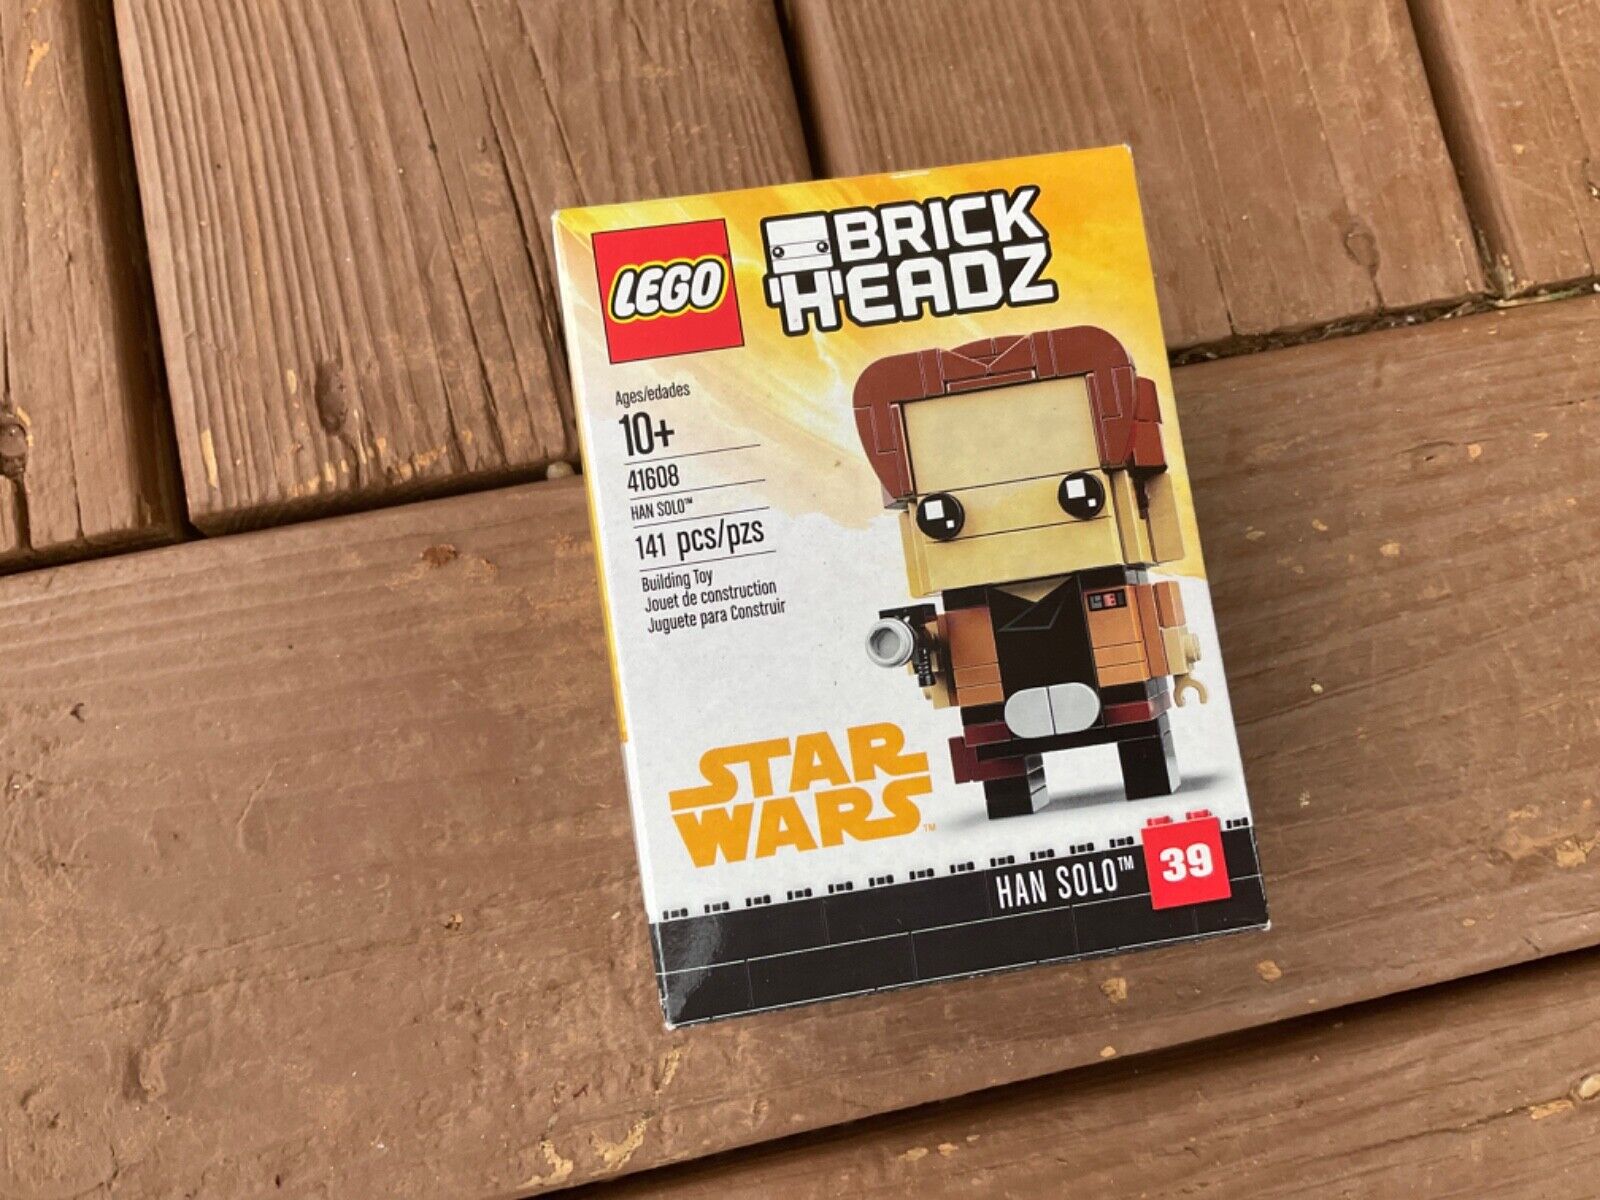 LEGO Brickheadz 41608 Hans Solo Star Wars